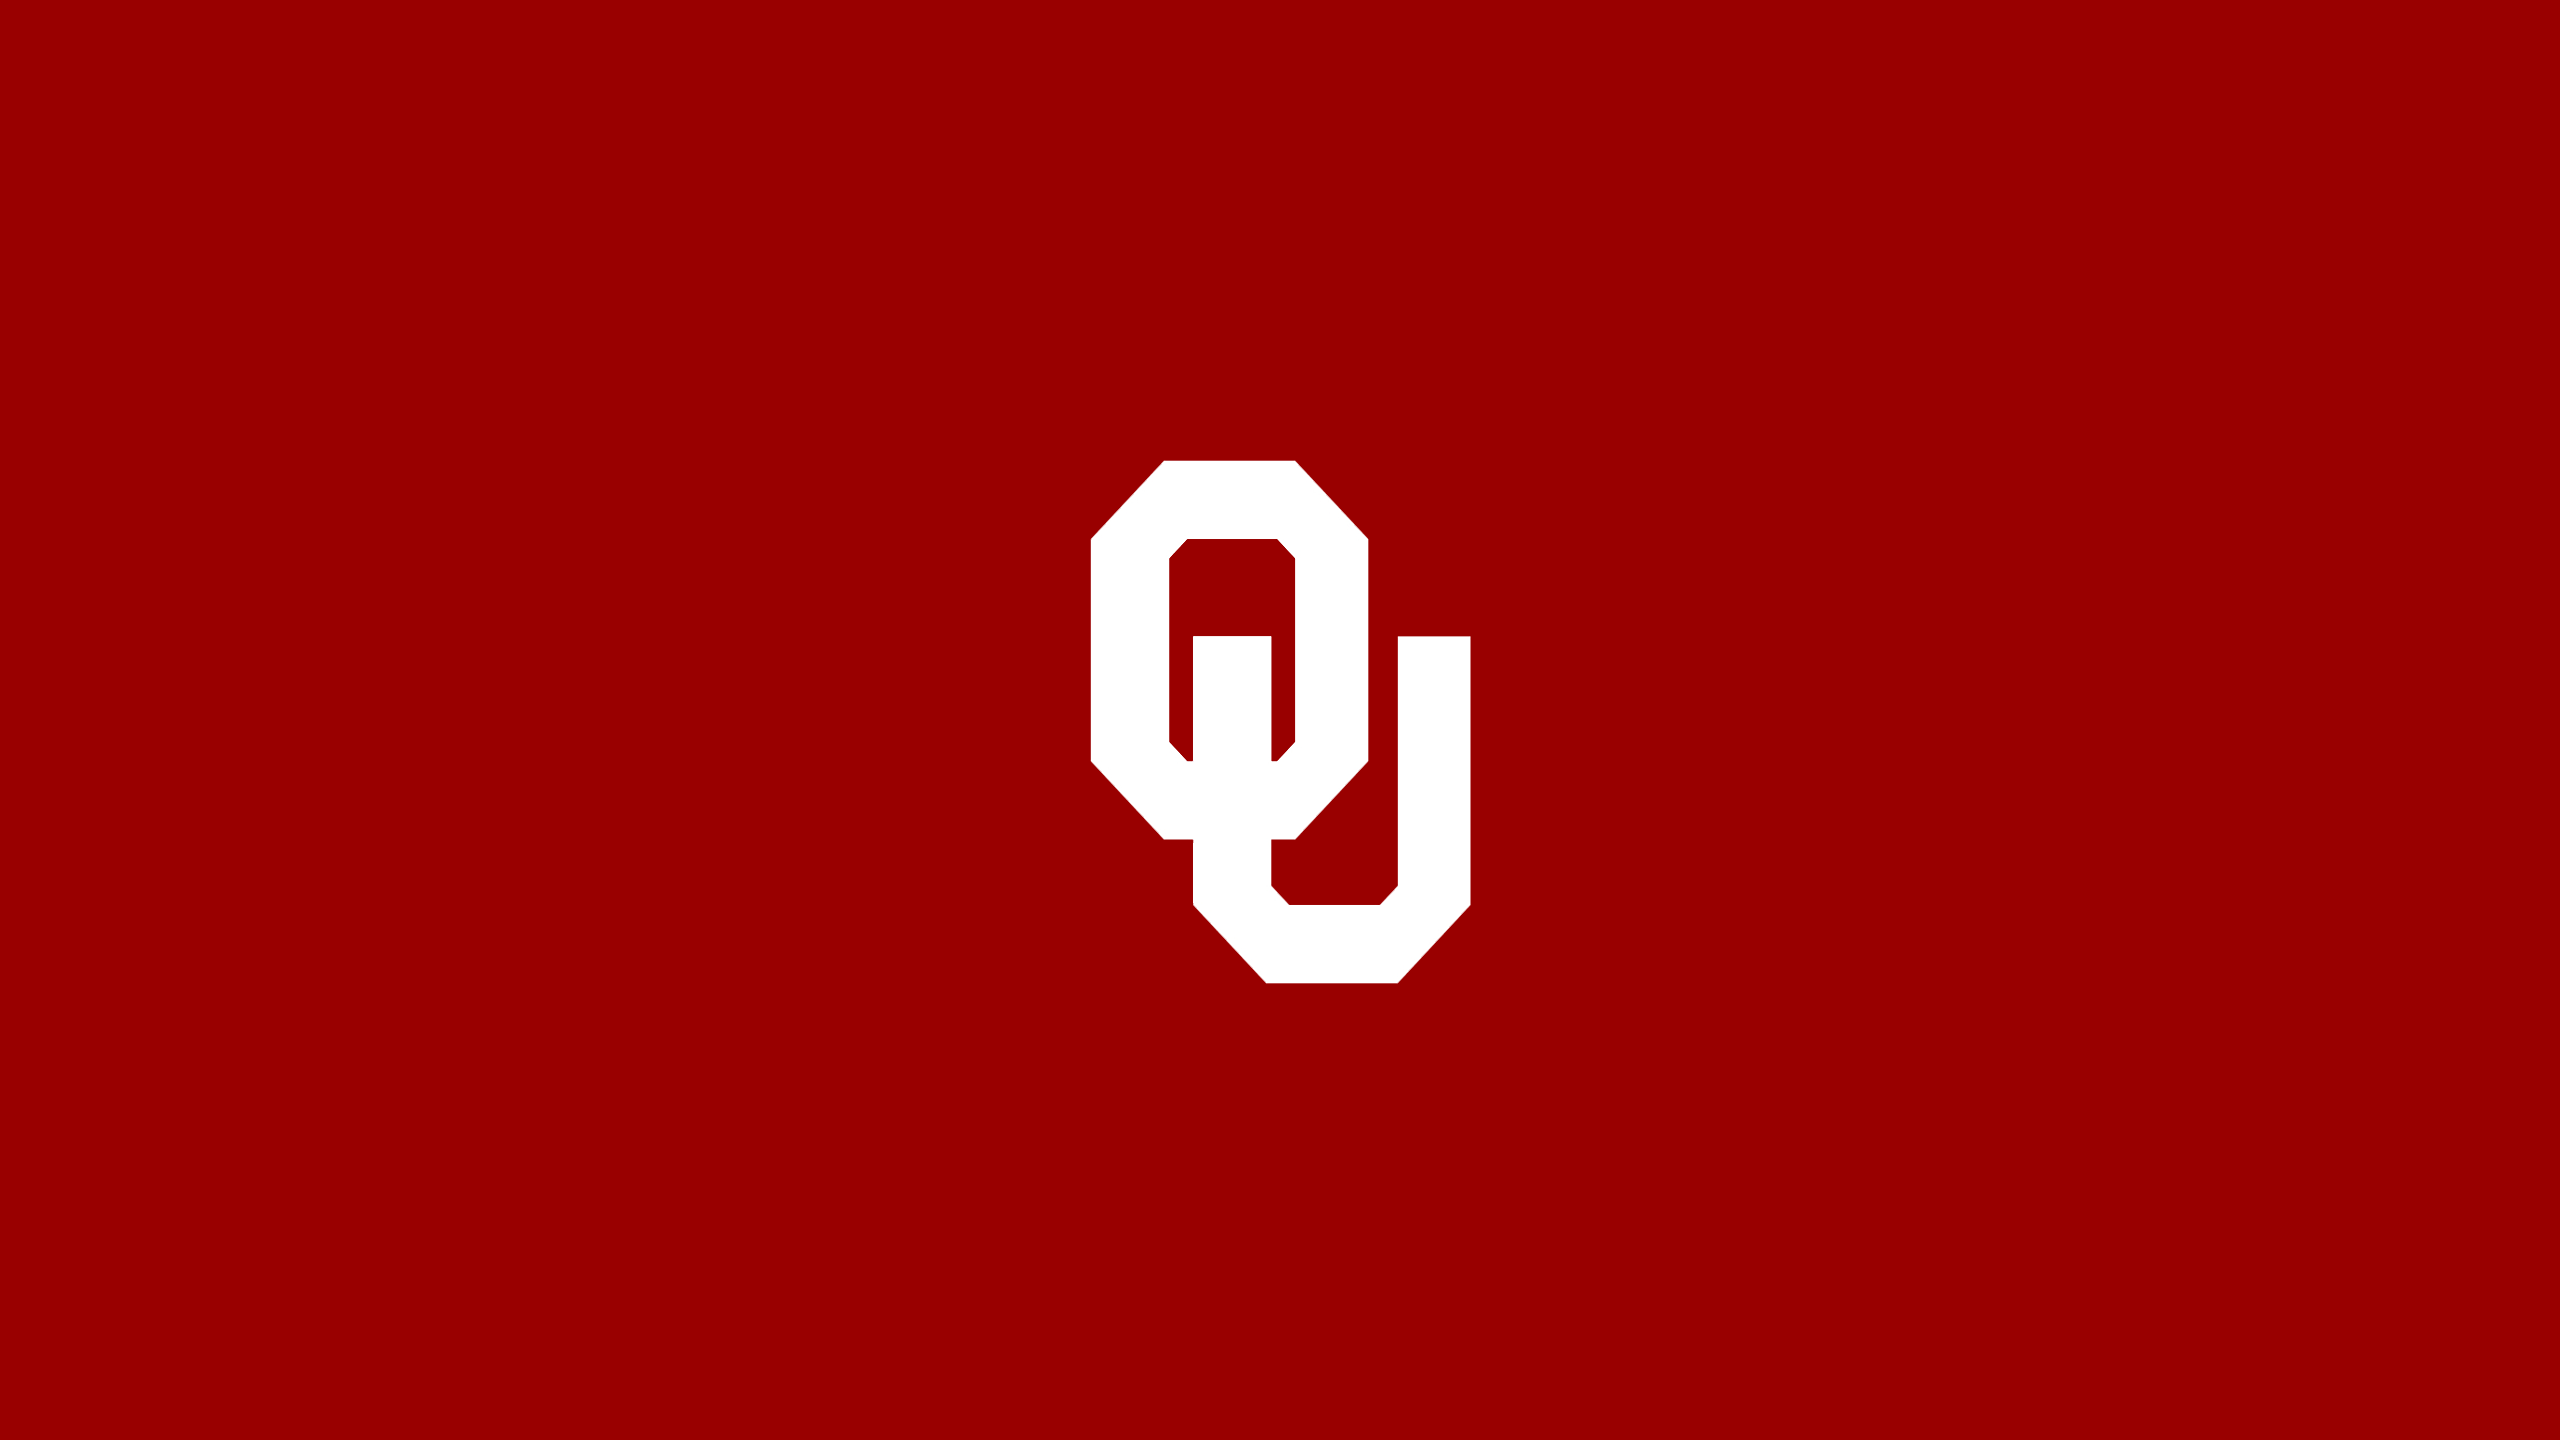 Oklahoma Sooners Football - NCAAF - Square Bettor